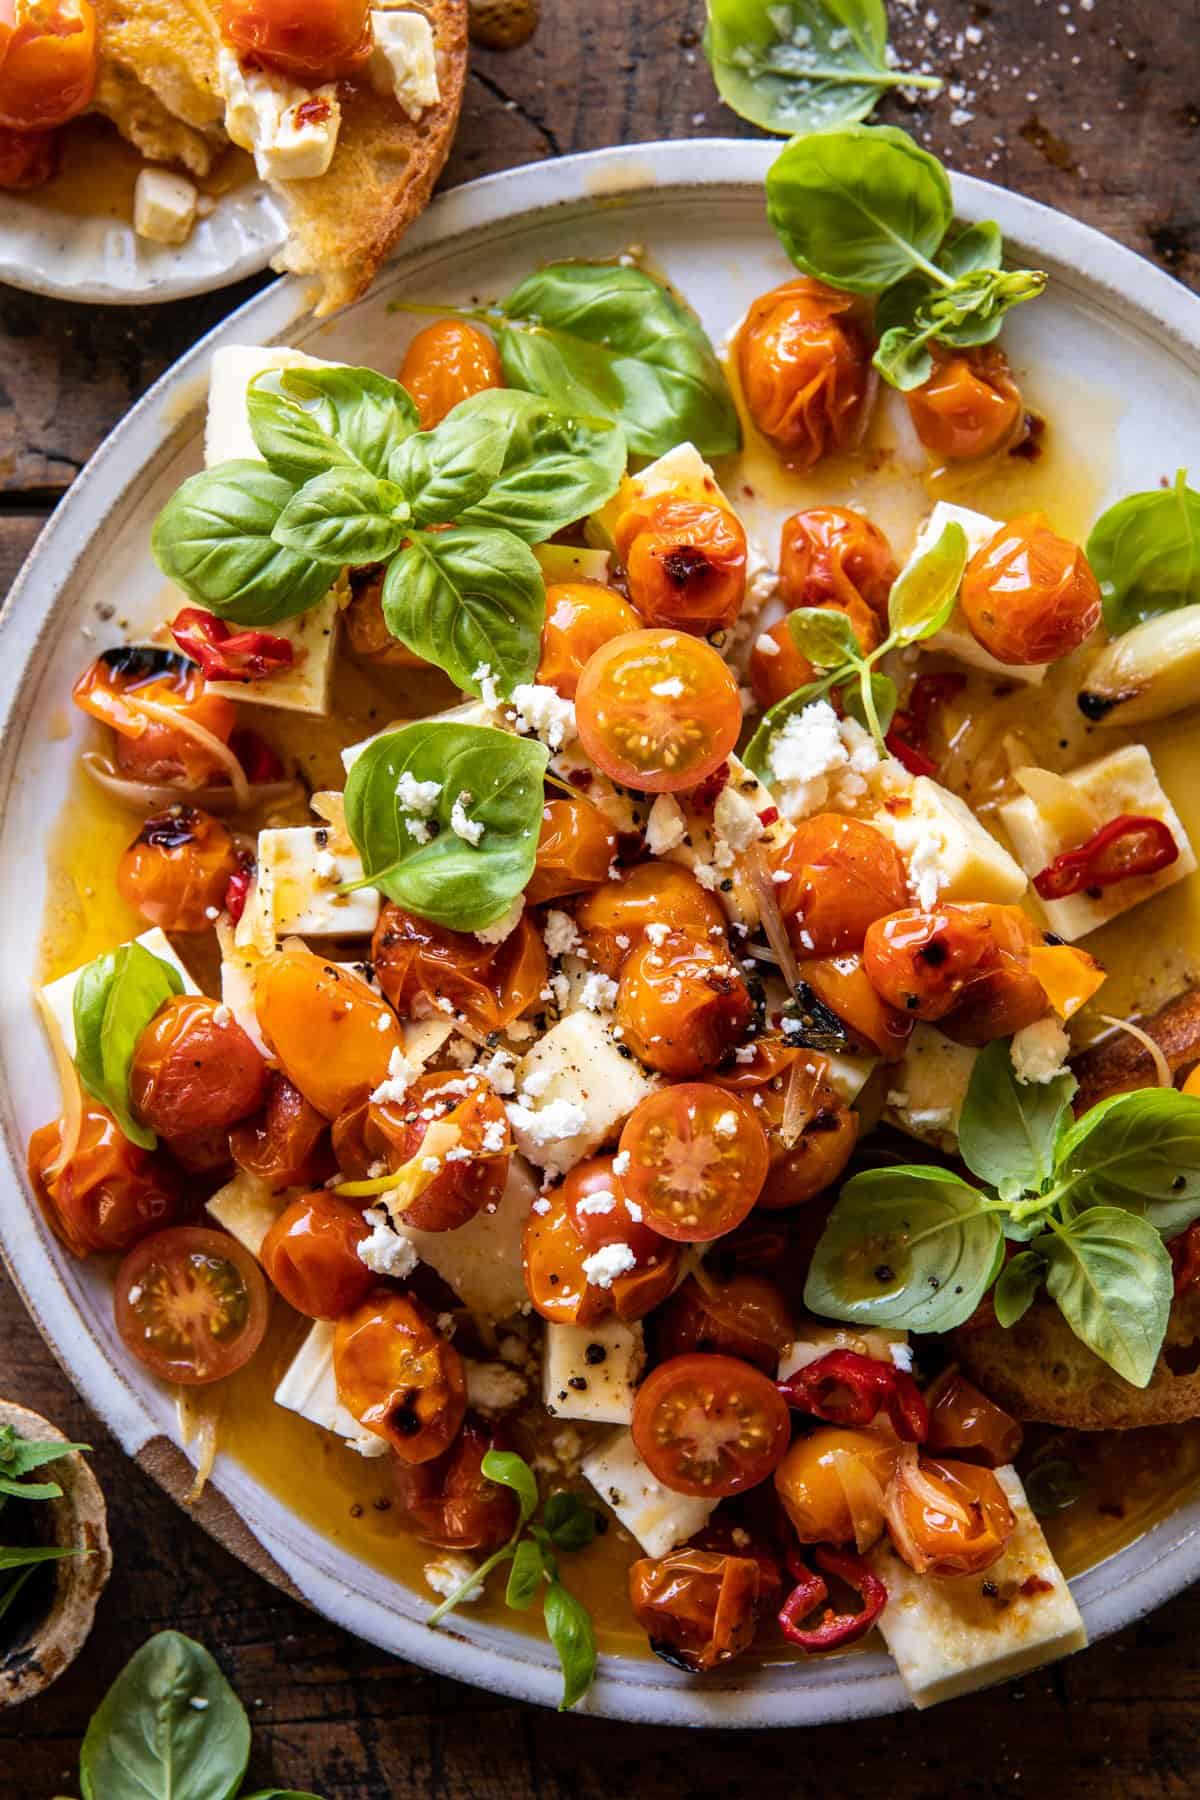 Crumbled Feta and Tomato Basil Vinaigrette Dip | halfbakedharvest.com